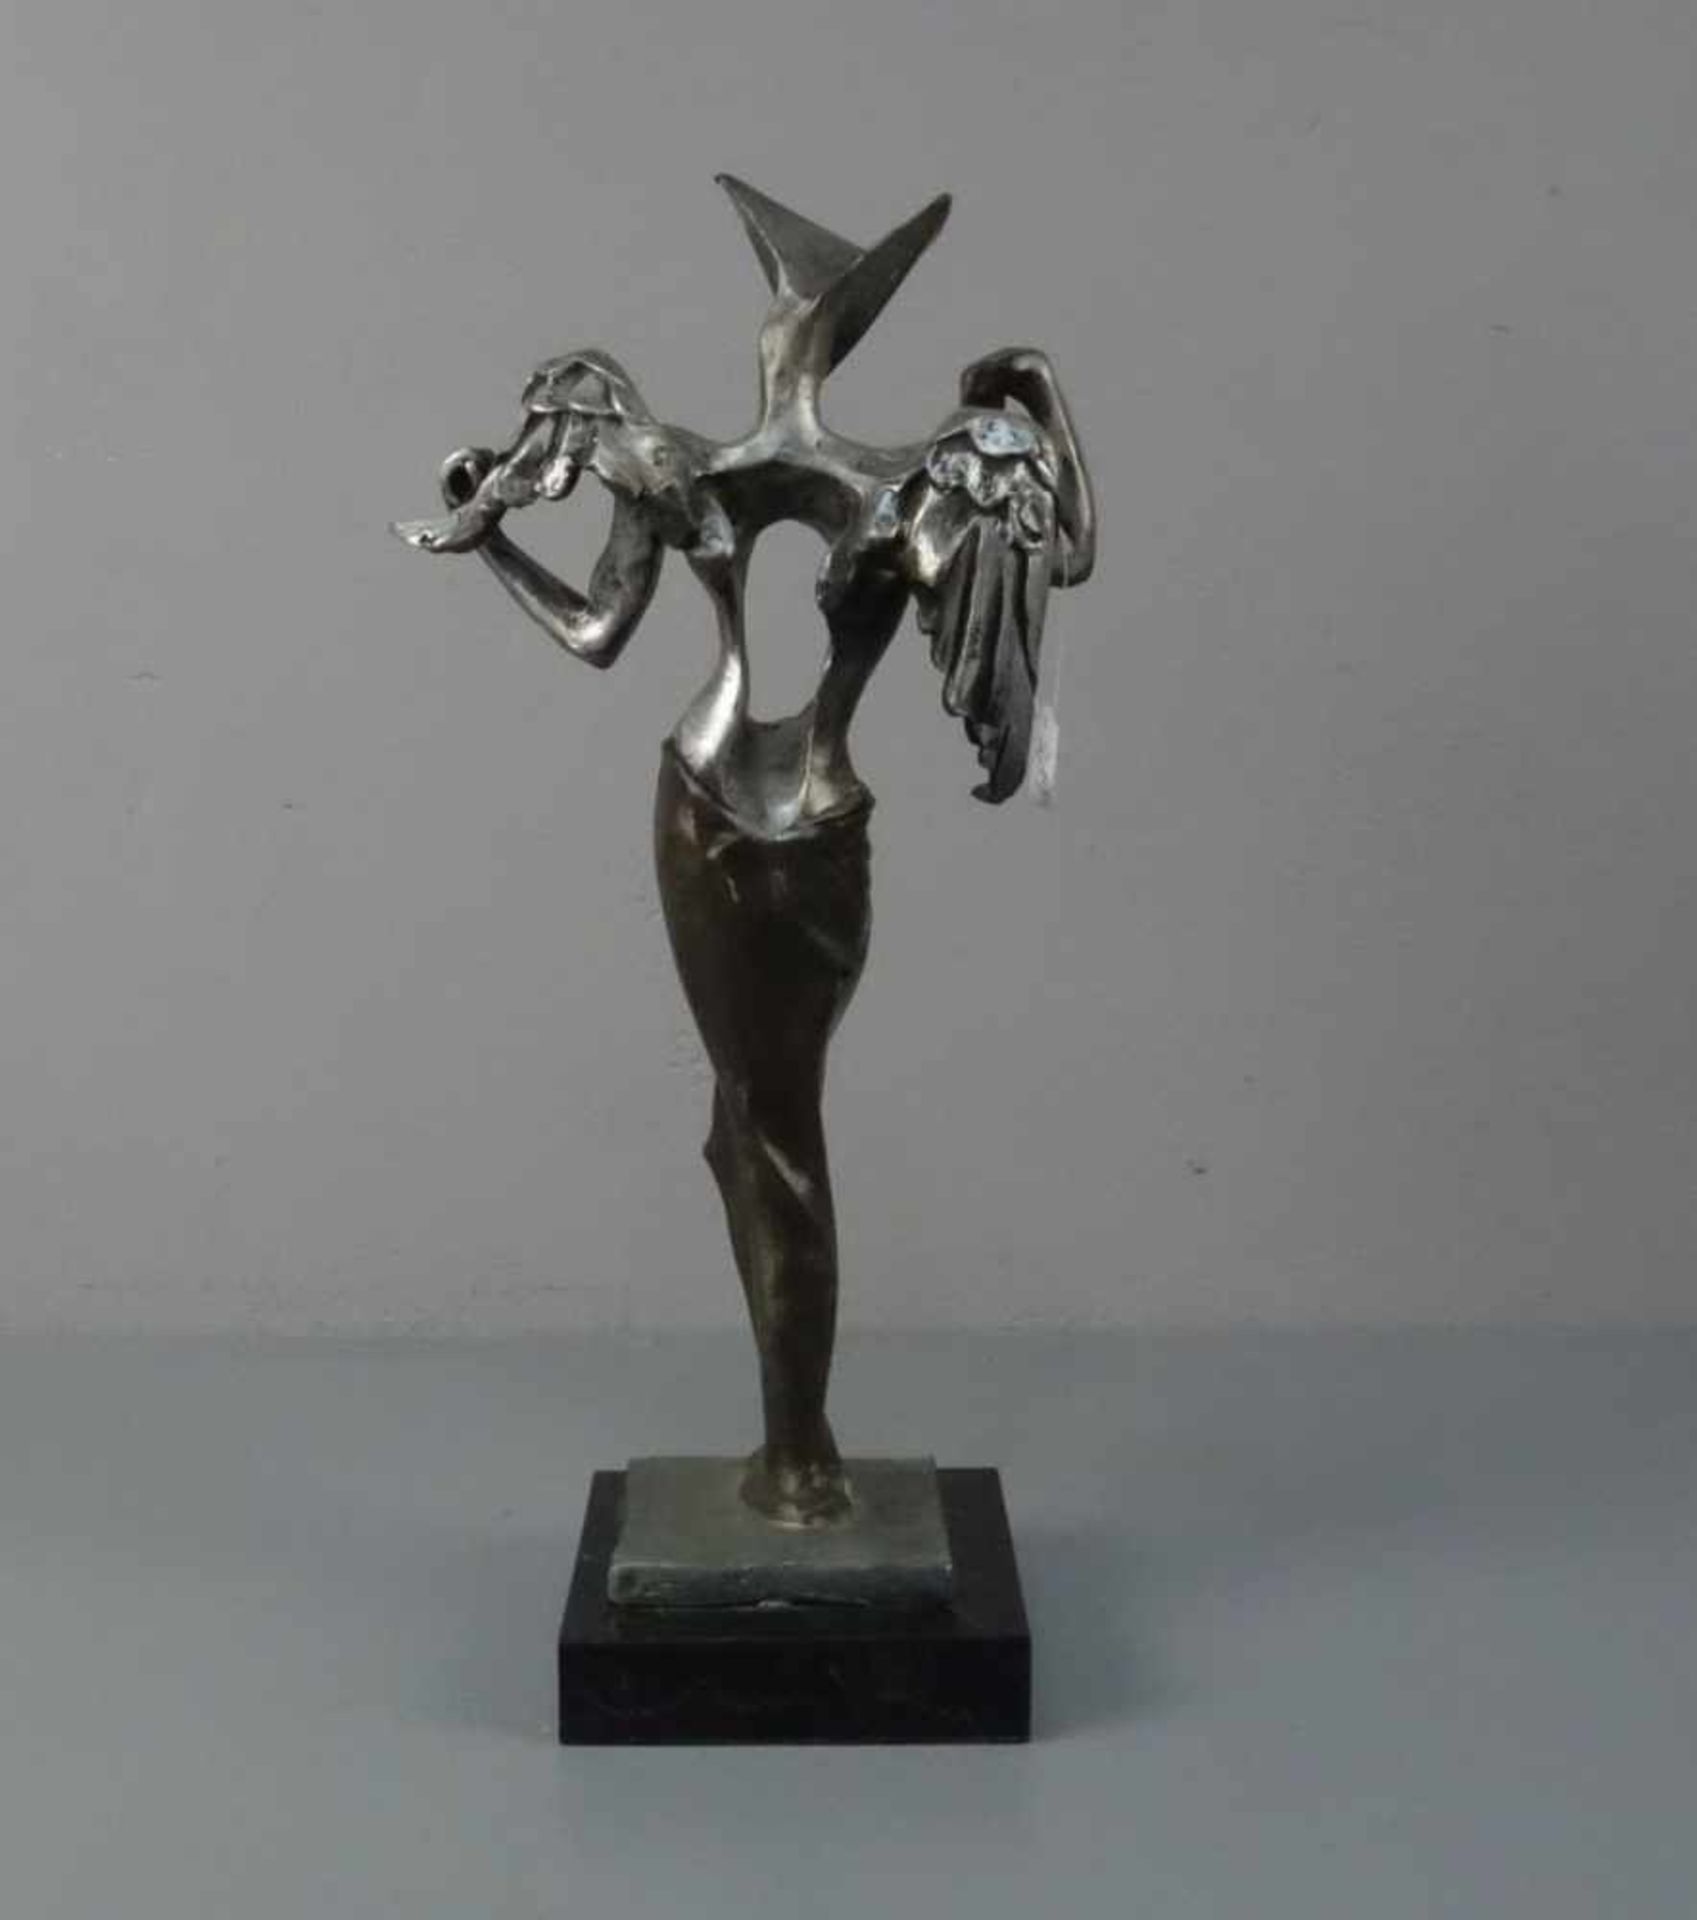 nach DALI, SALVADOR (1904-1889), Skulptur / sculpture "Surrealistischer Engel", Bronze, - Image 3 of 4